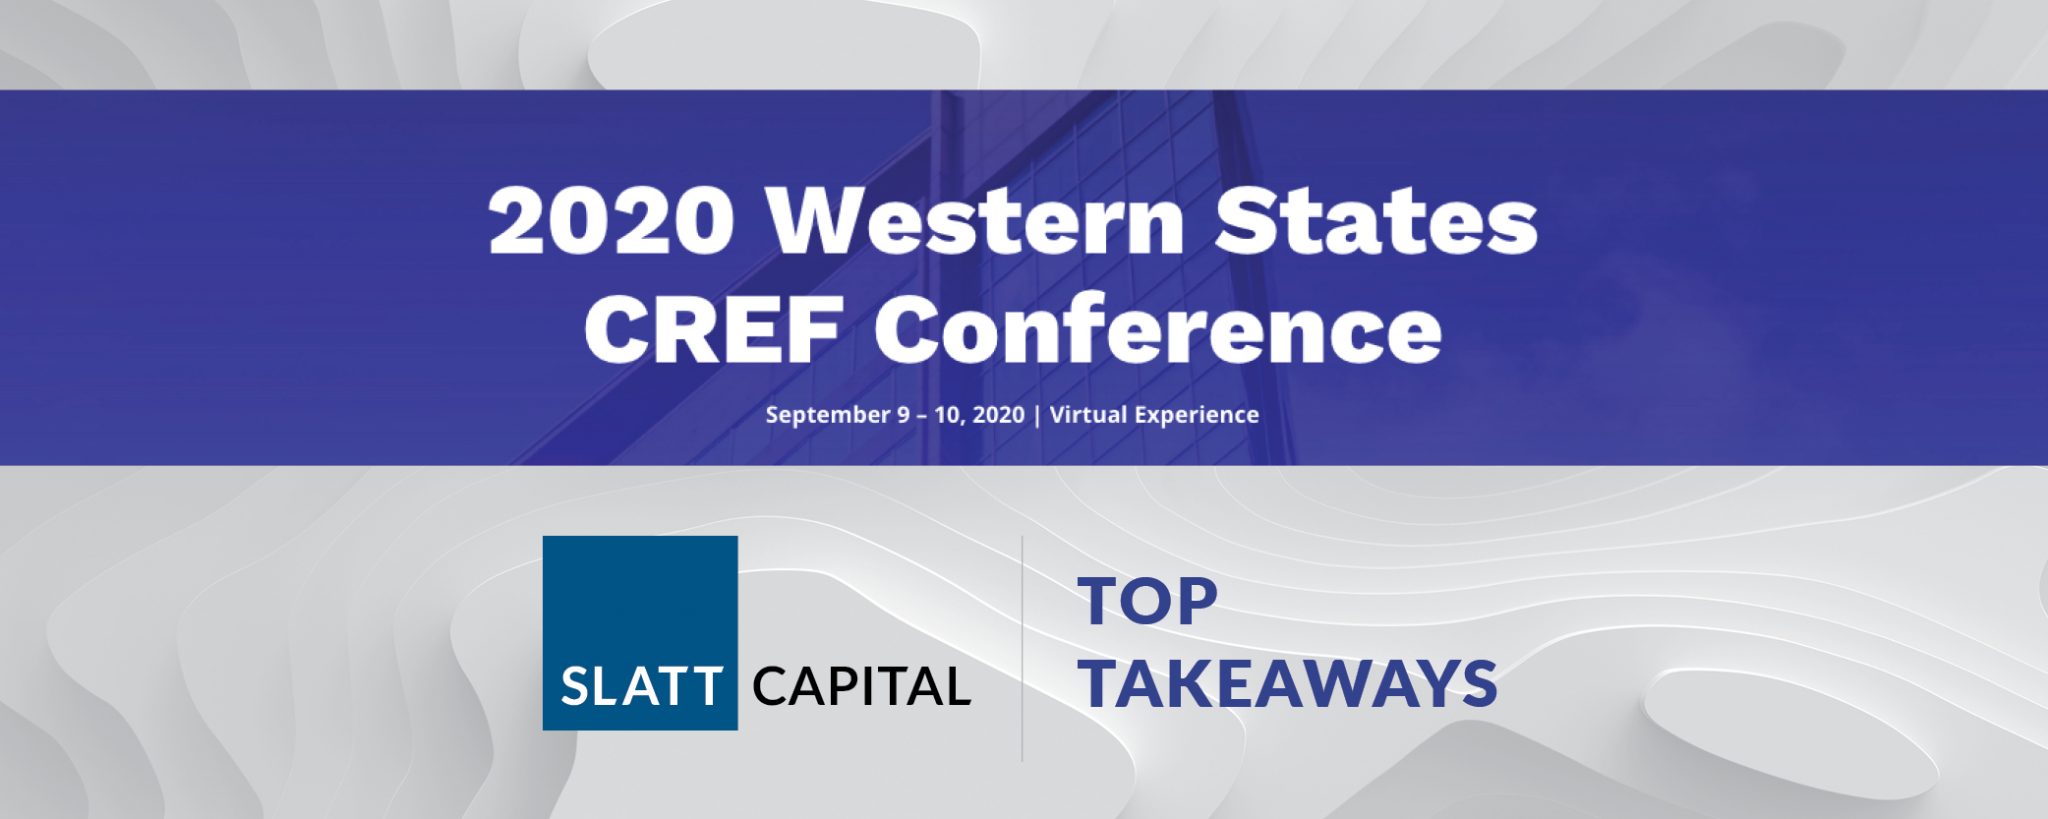 2020 CMBA Western States CREF Conference Takeaways Slatt Capital